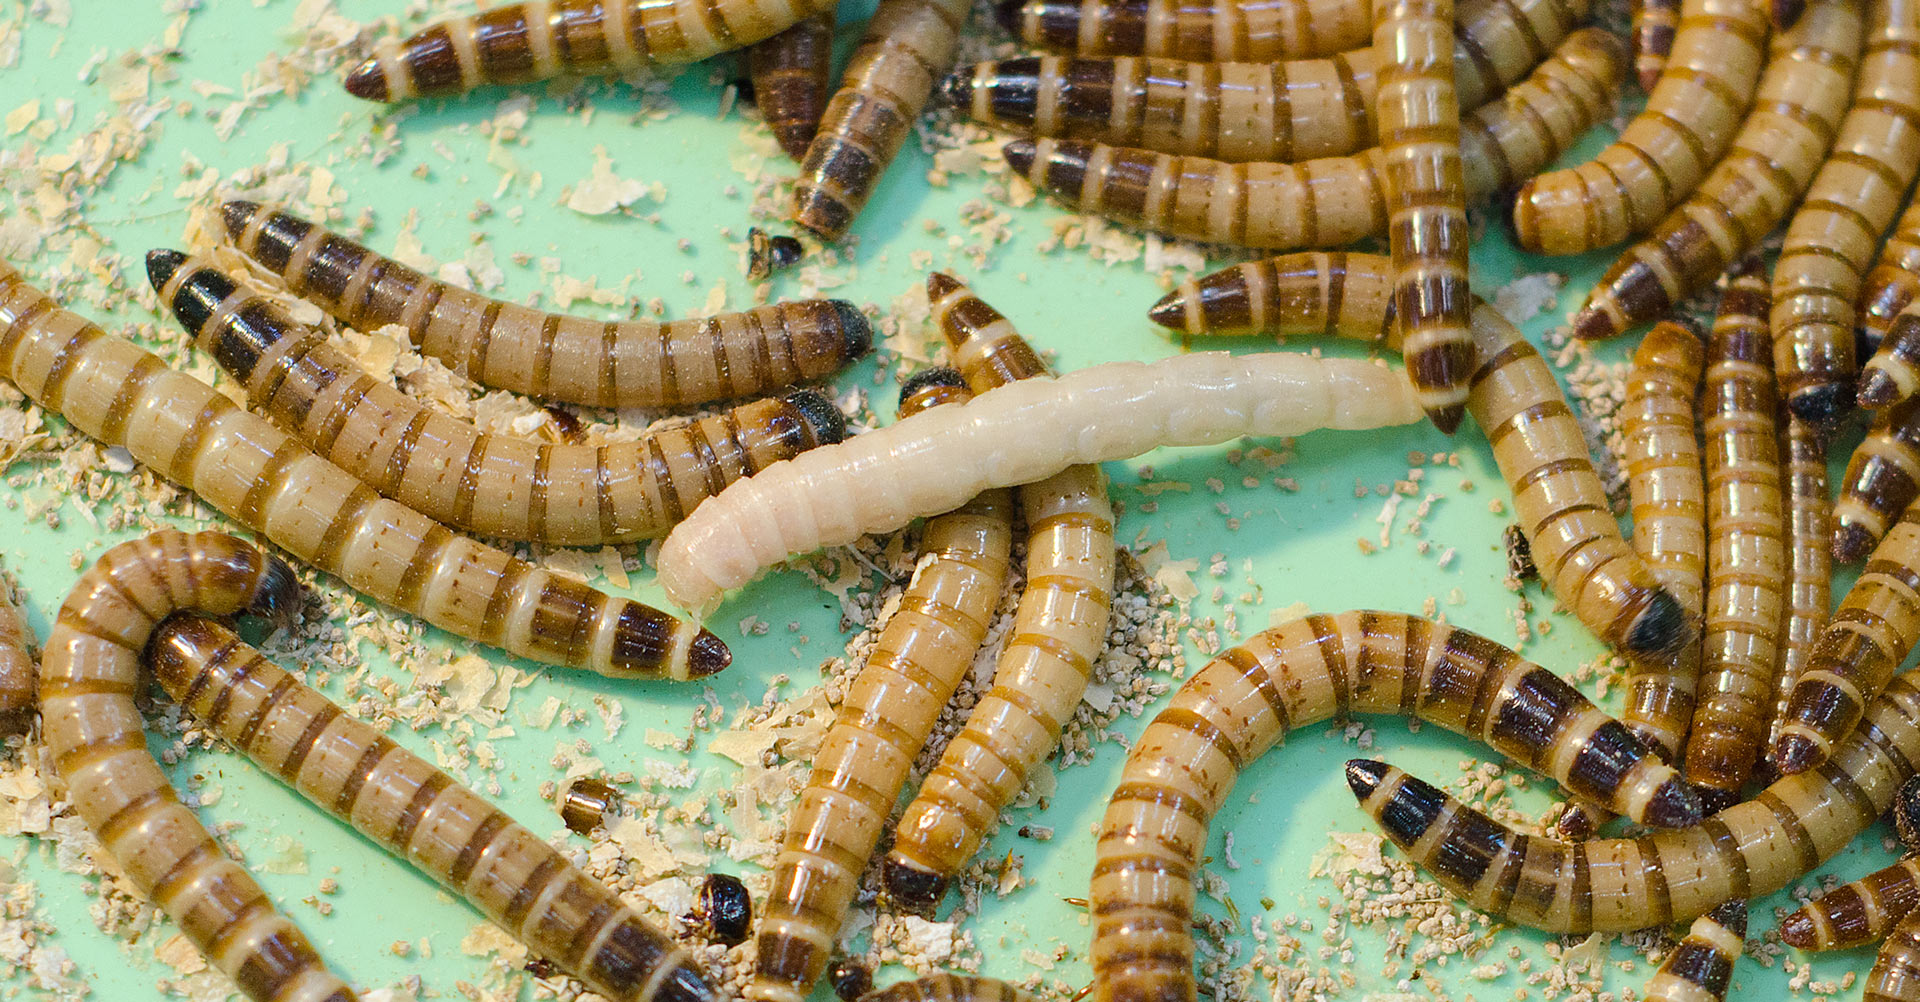 https://allisonpestcontrol.com/wp-content/uploads/2017/11/mealworms-pantry-pests.jpg